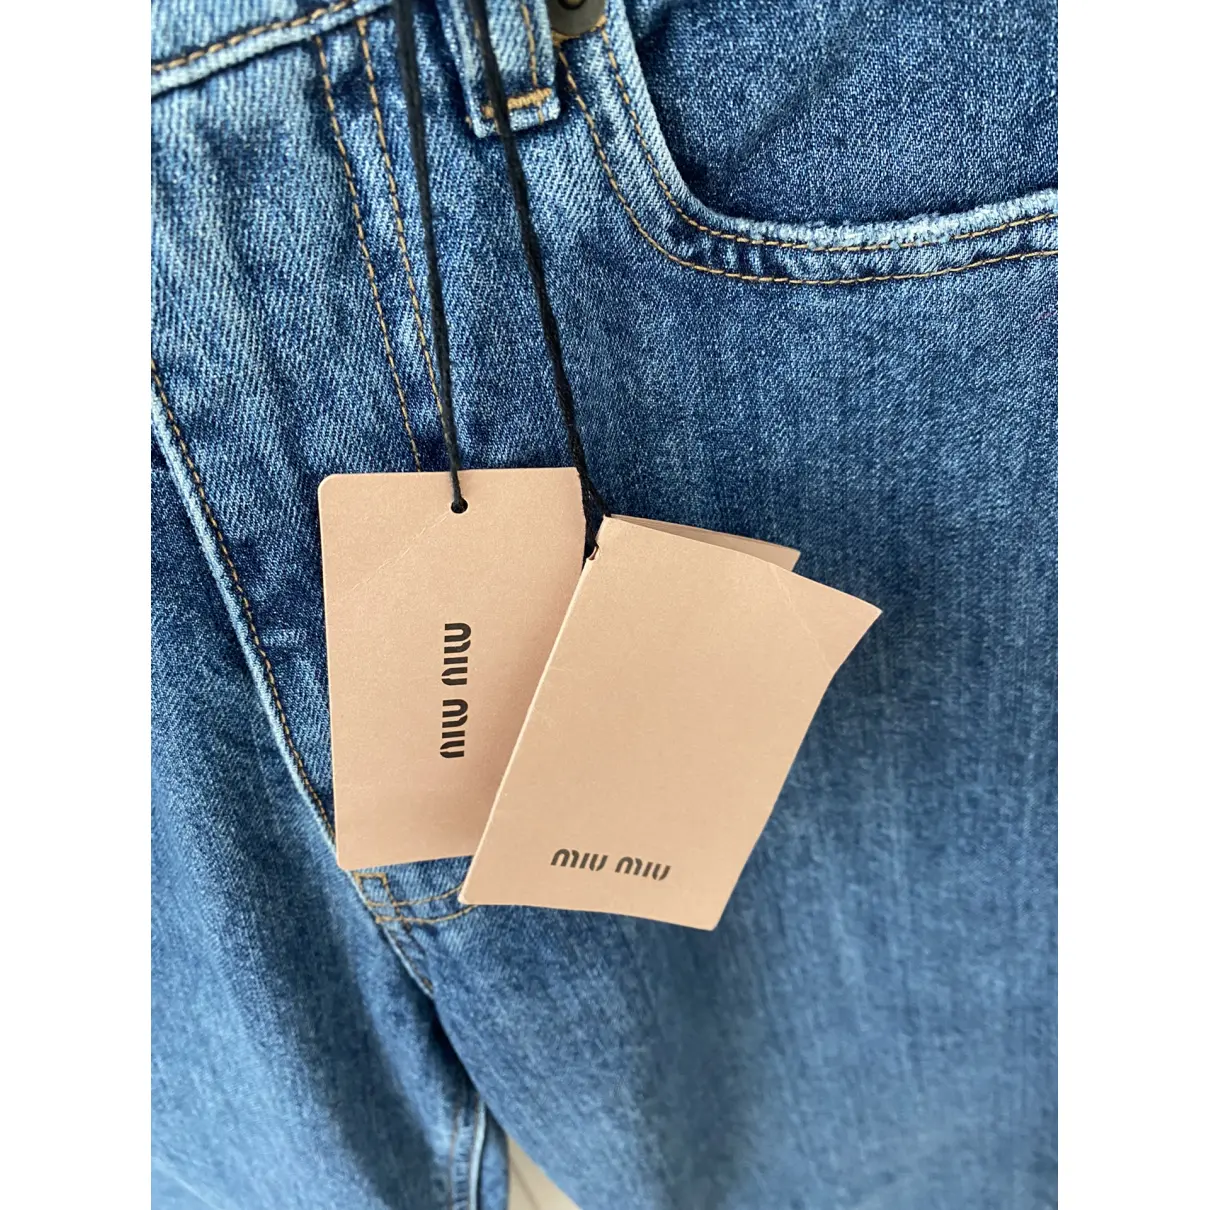 Buy Miu Miu Jeans online